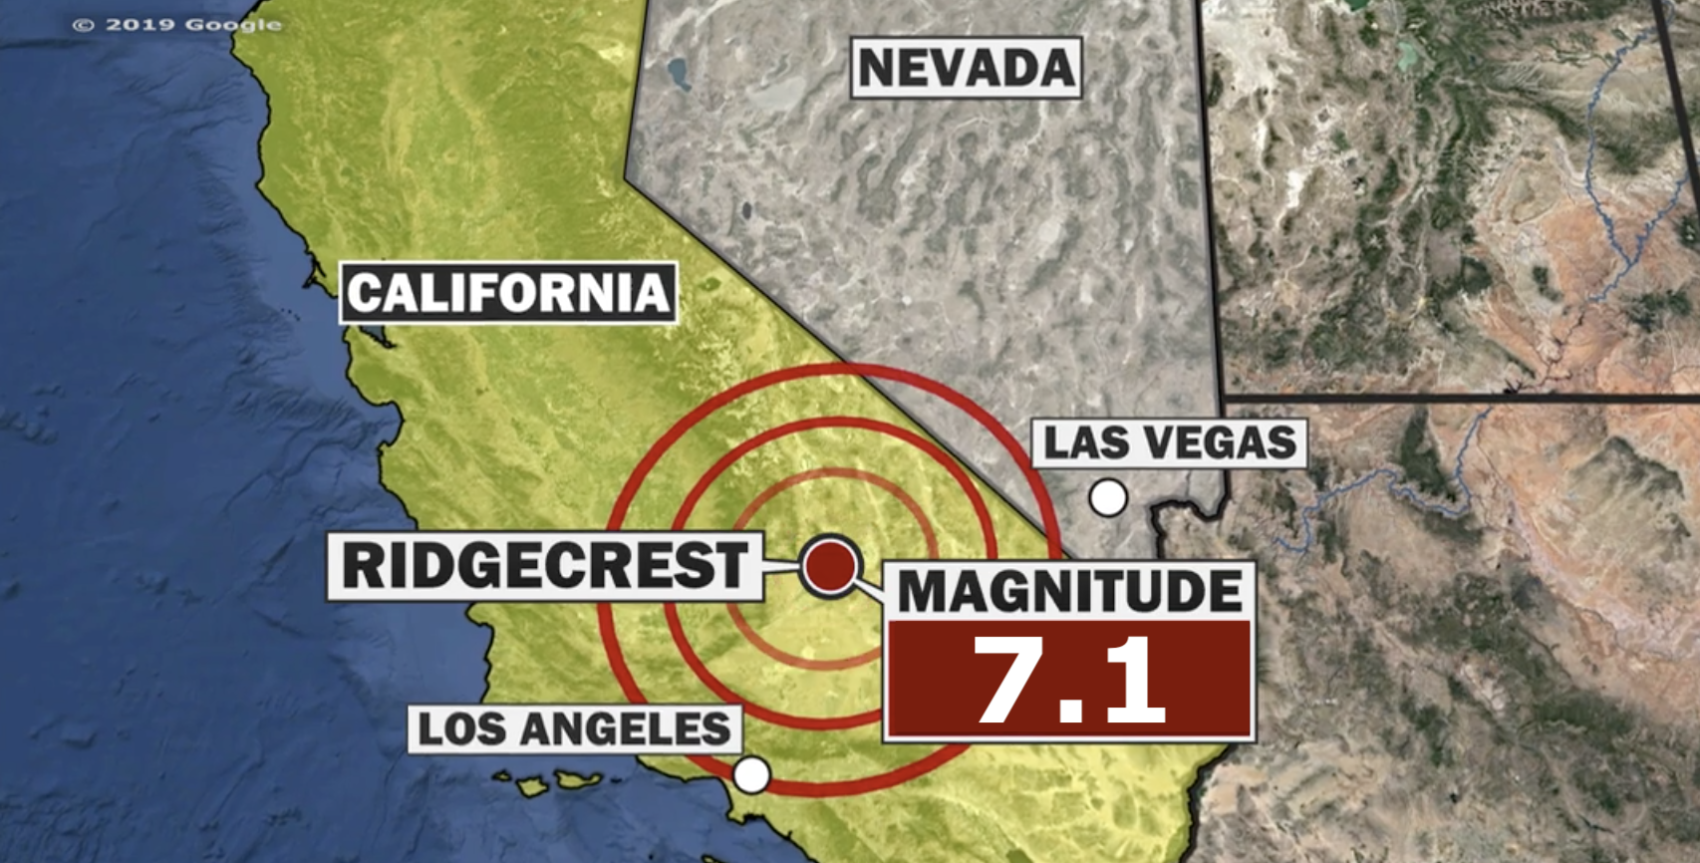 Large 7.1Magnitude Earthquake Hits Southern California Tonight at 8